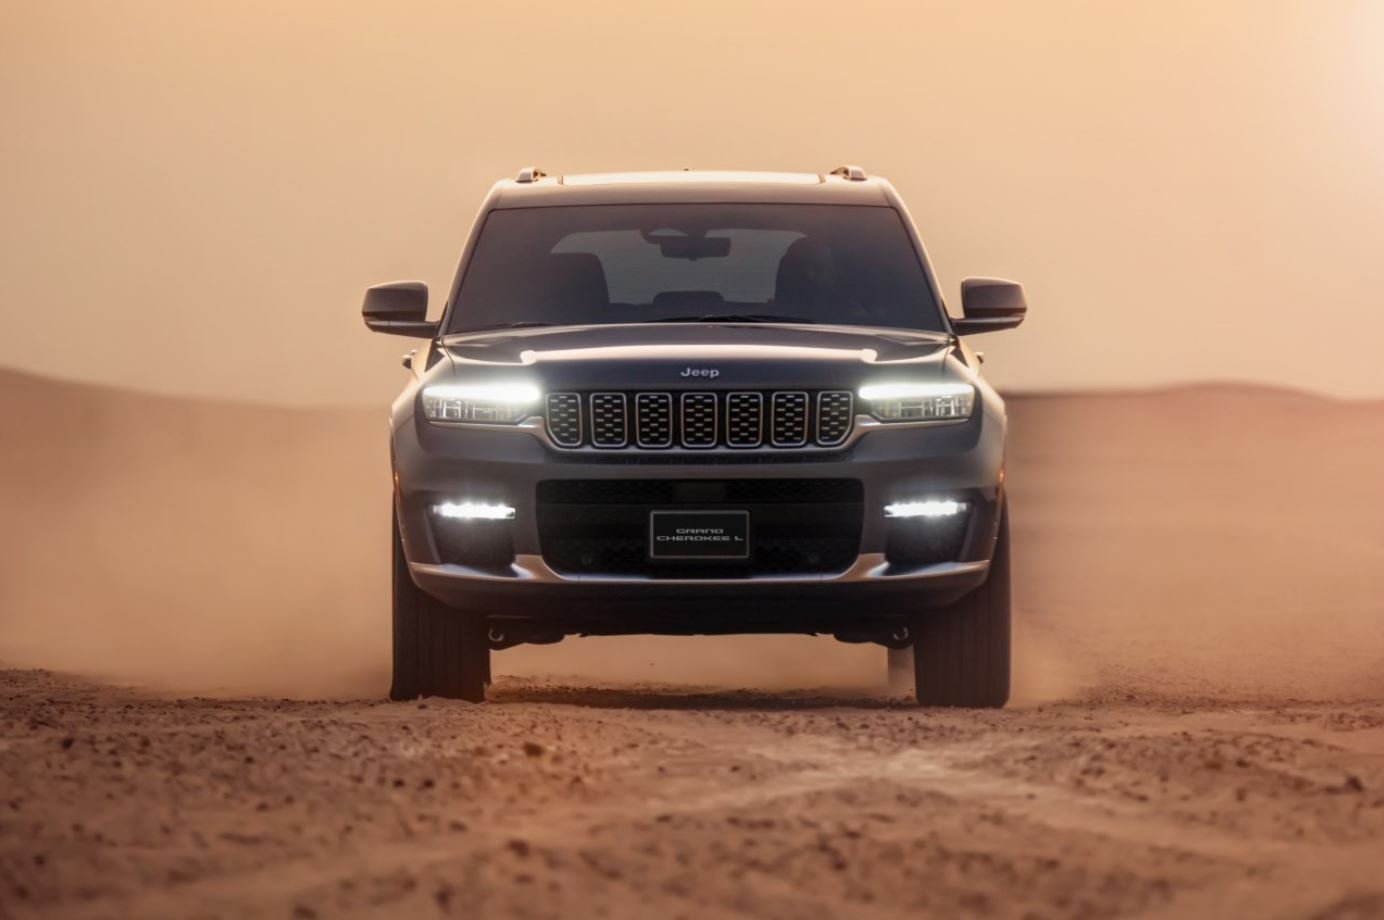 Al-Futtaim Trading Enterprises Announces Availability of Anticipated All-New Jeep(R) Grand Cherokee L in the UAE